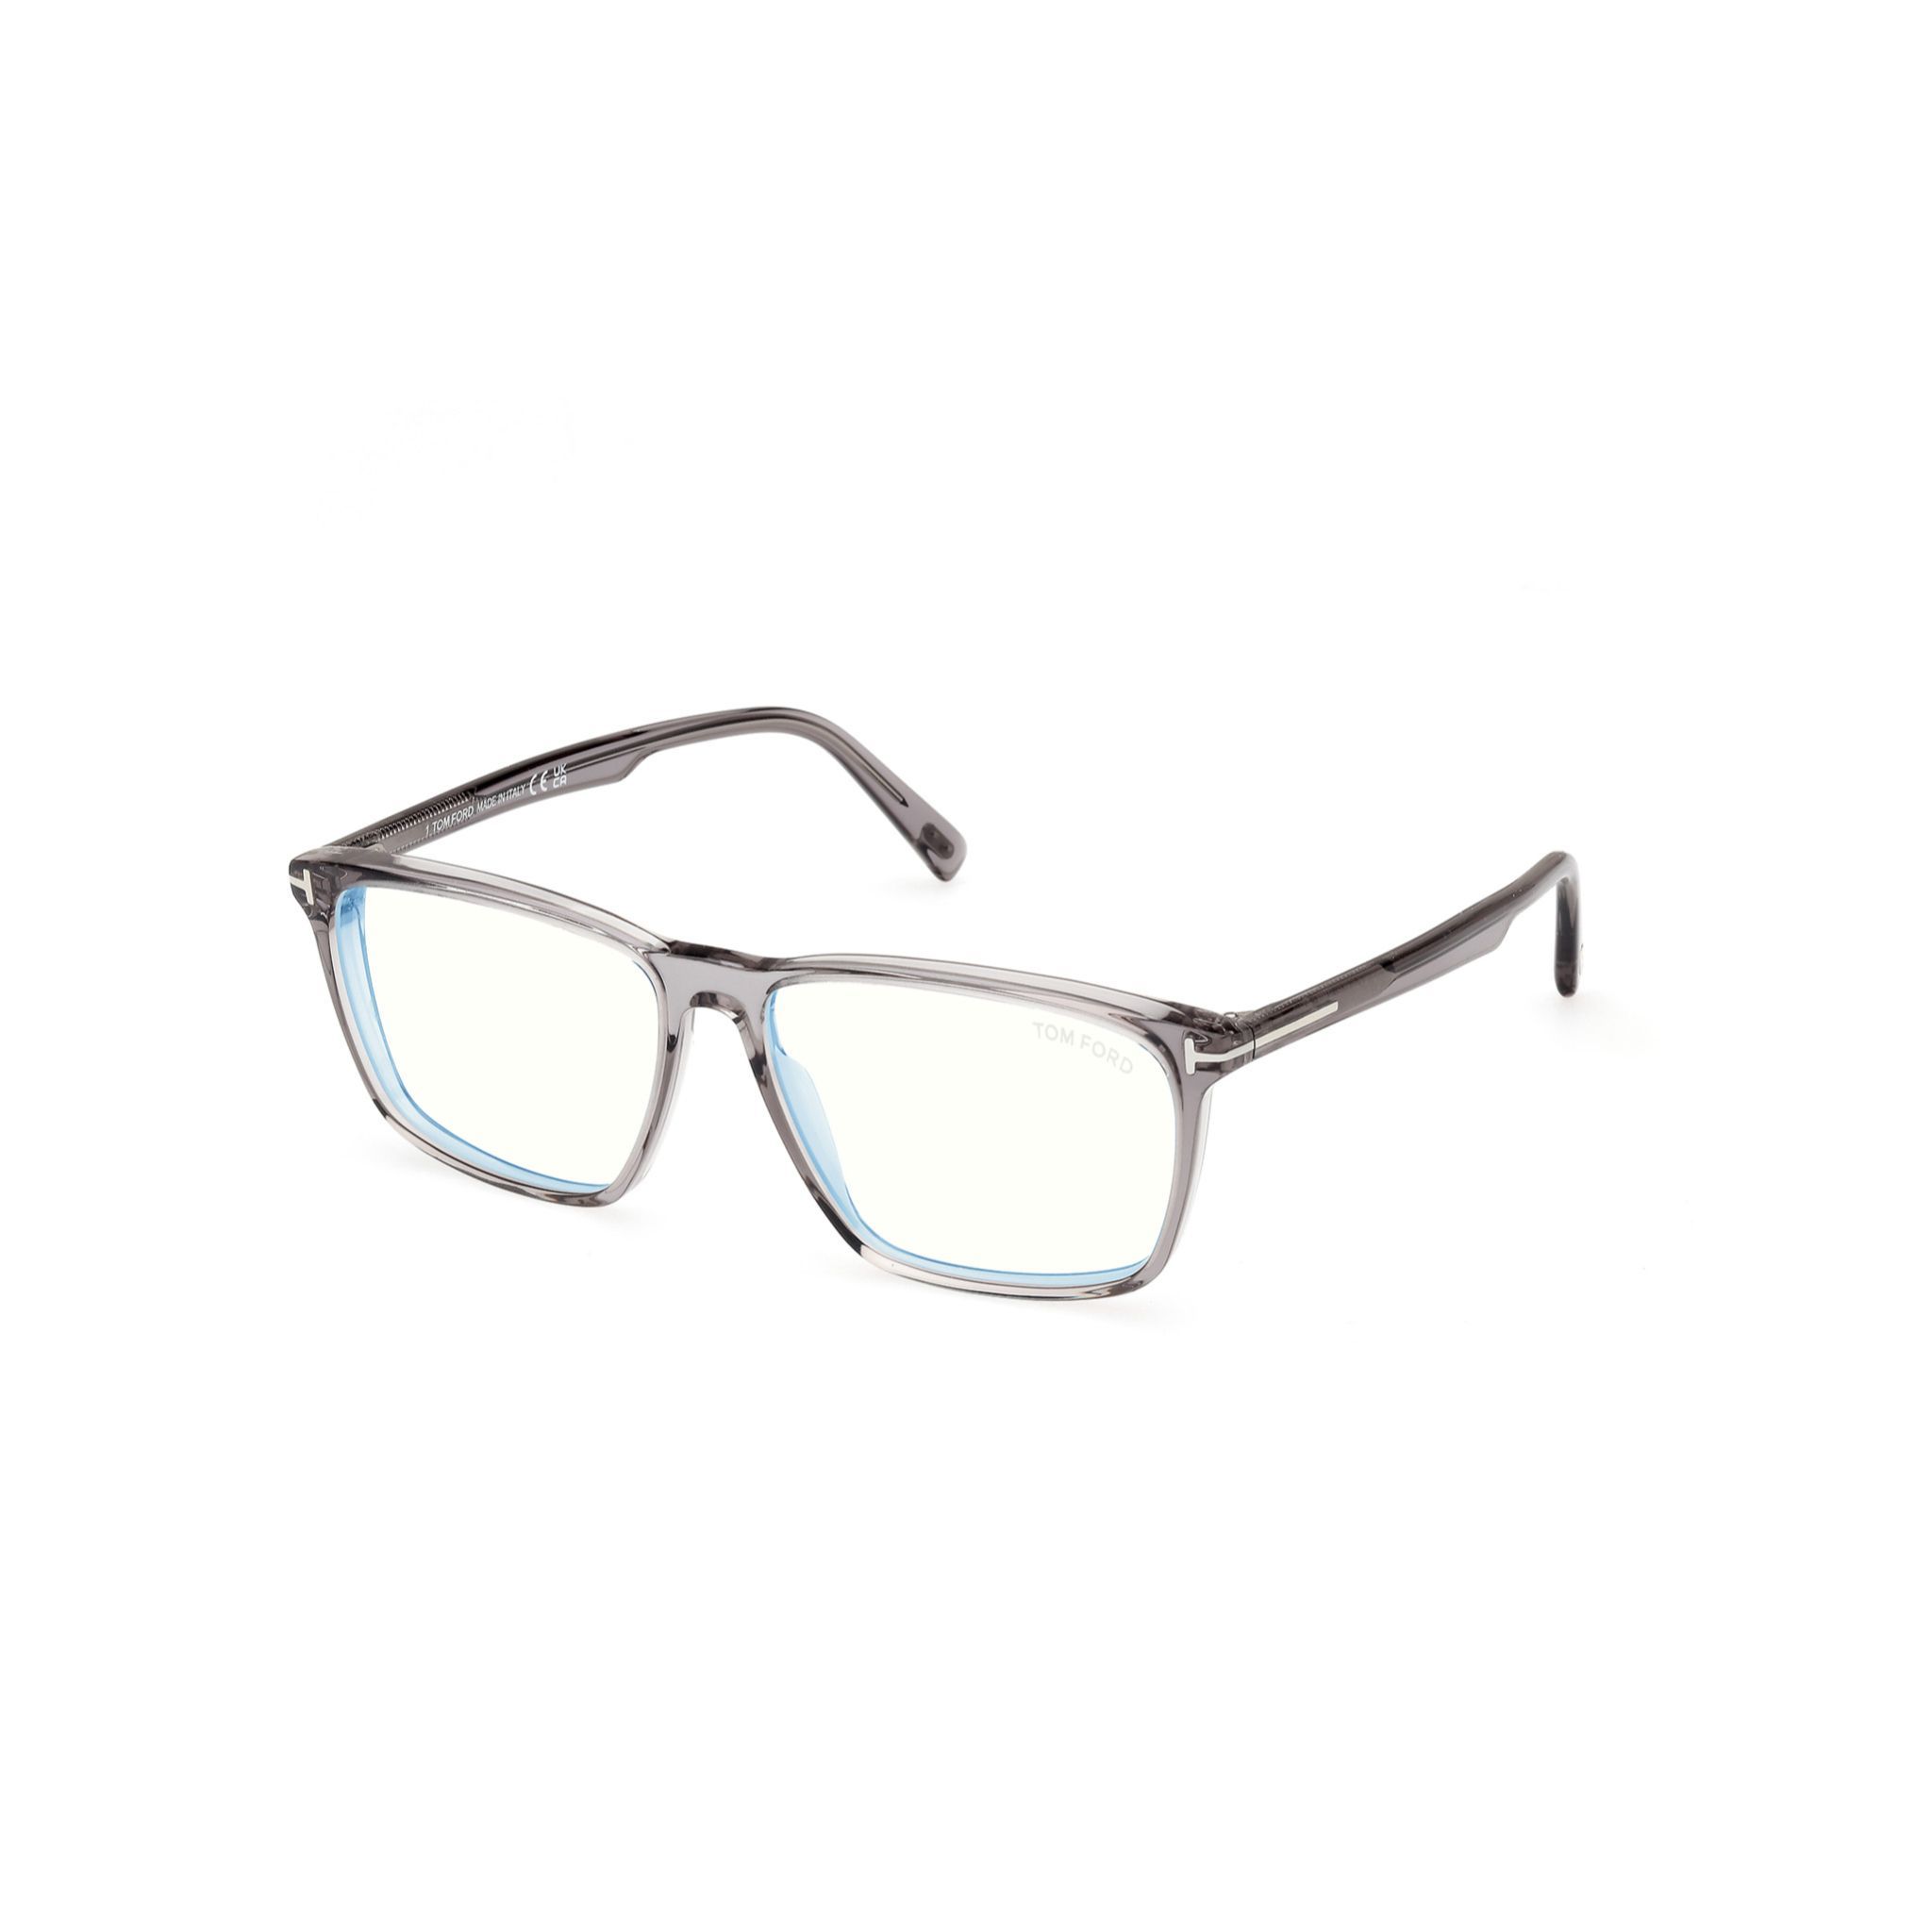 FT5959 Square Eyeglasses B020 - size 56